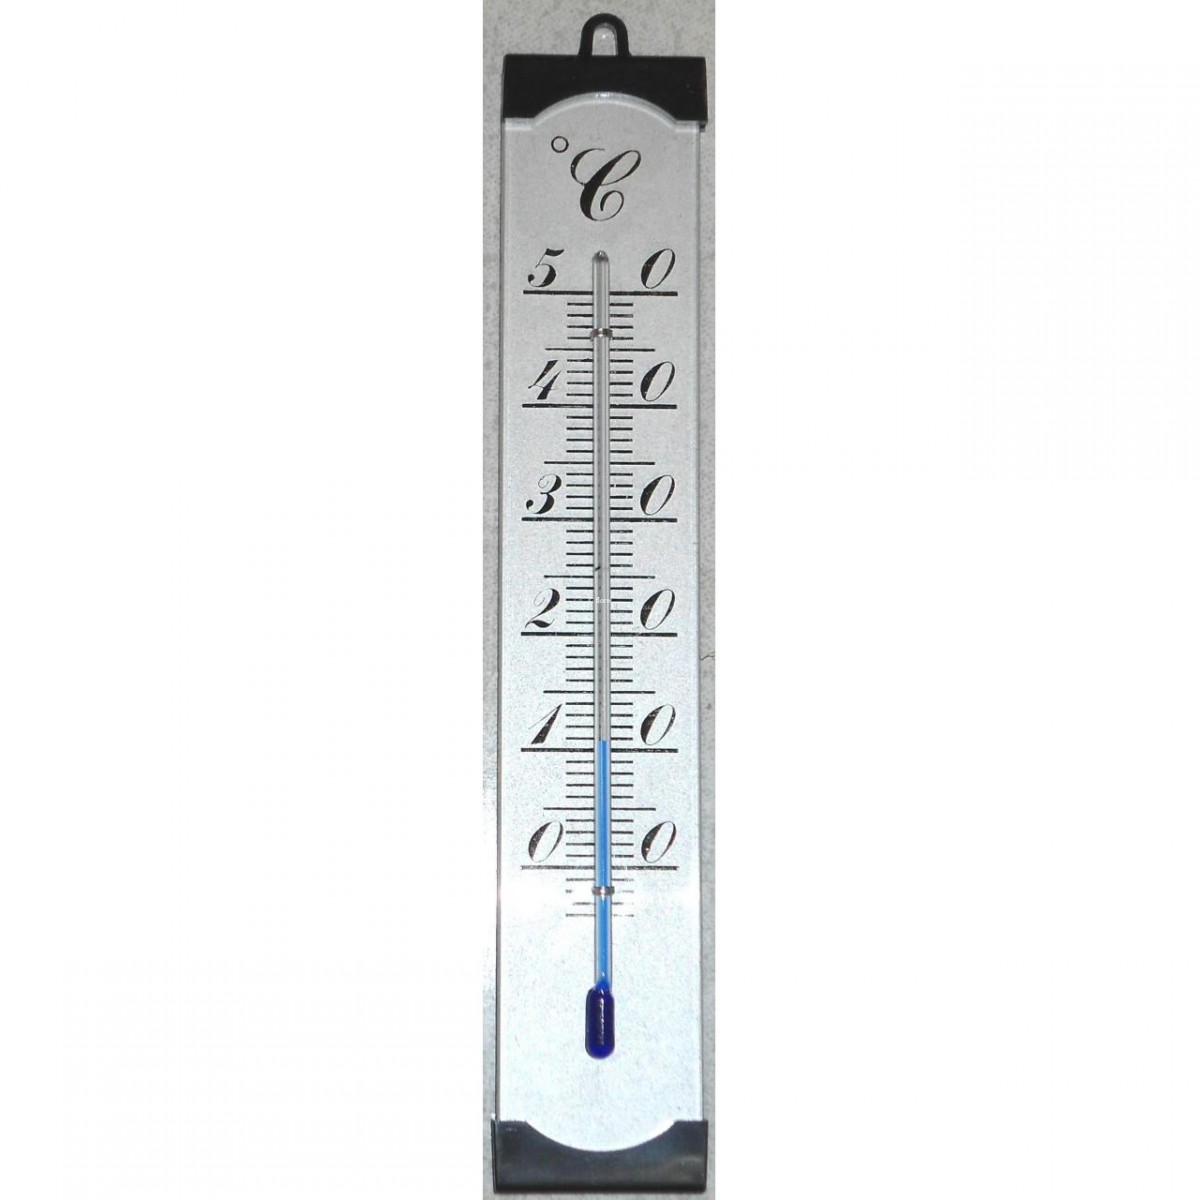 Thermometre decoratif